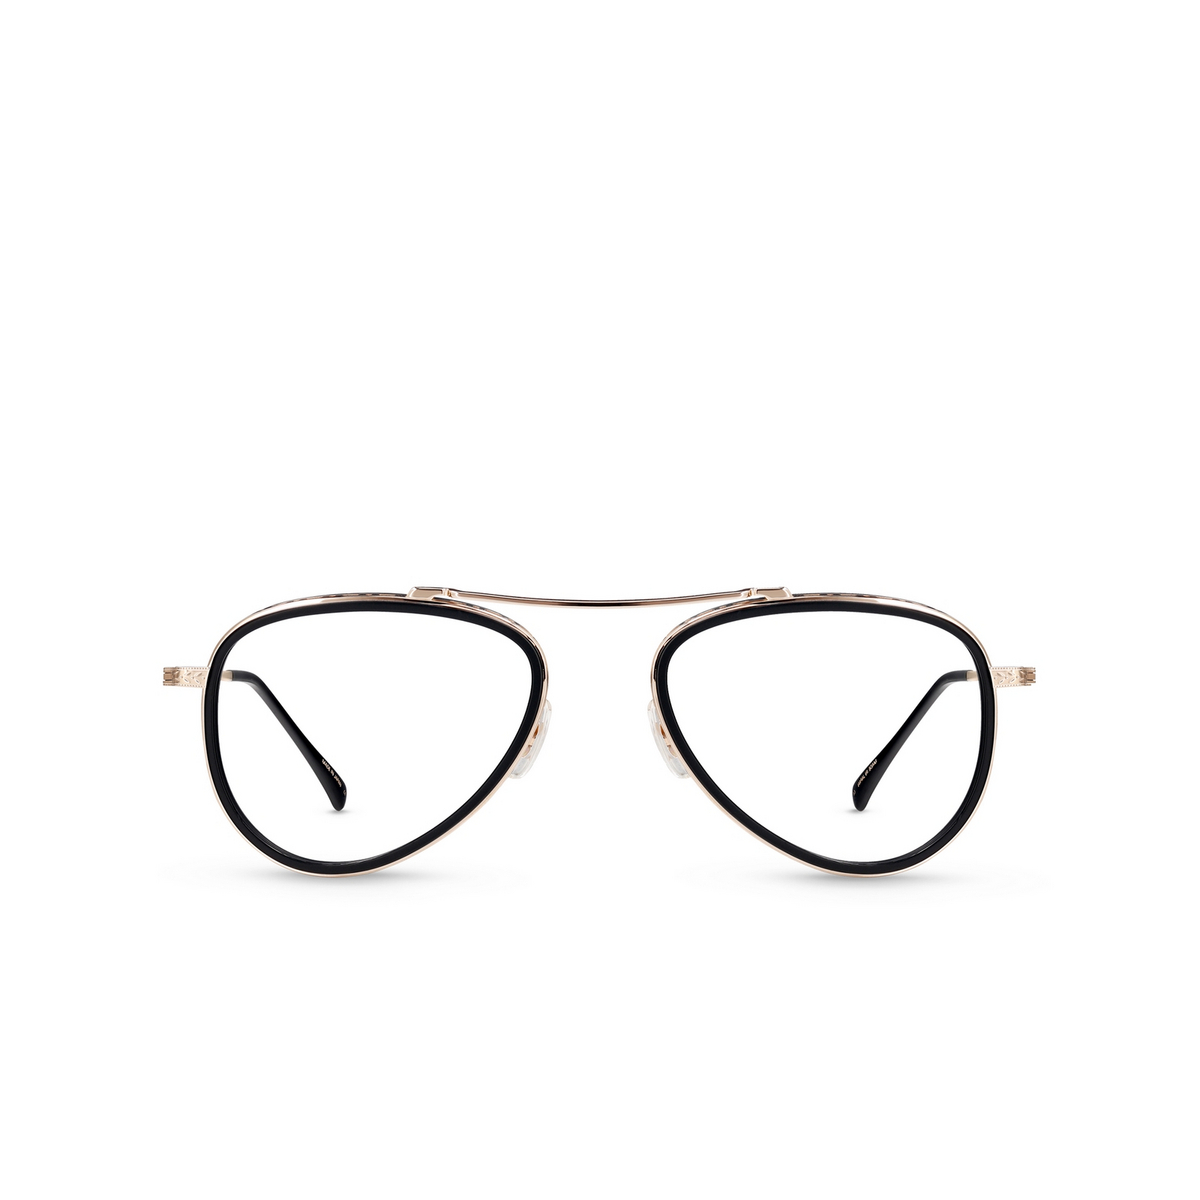 Mr. Leight ICHI C Eyeglasses MBK-12KWG-MBK Matte Black-12K White Gold-Matte Black - front view